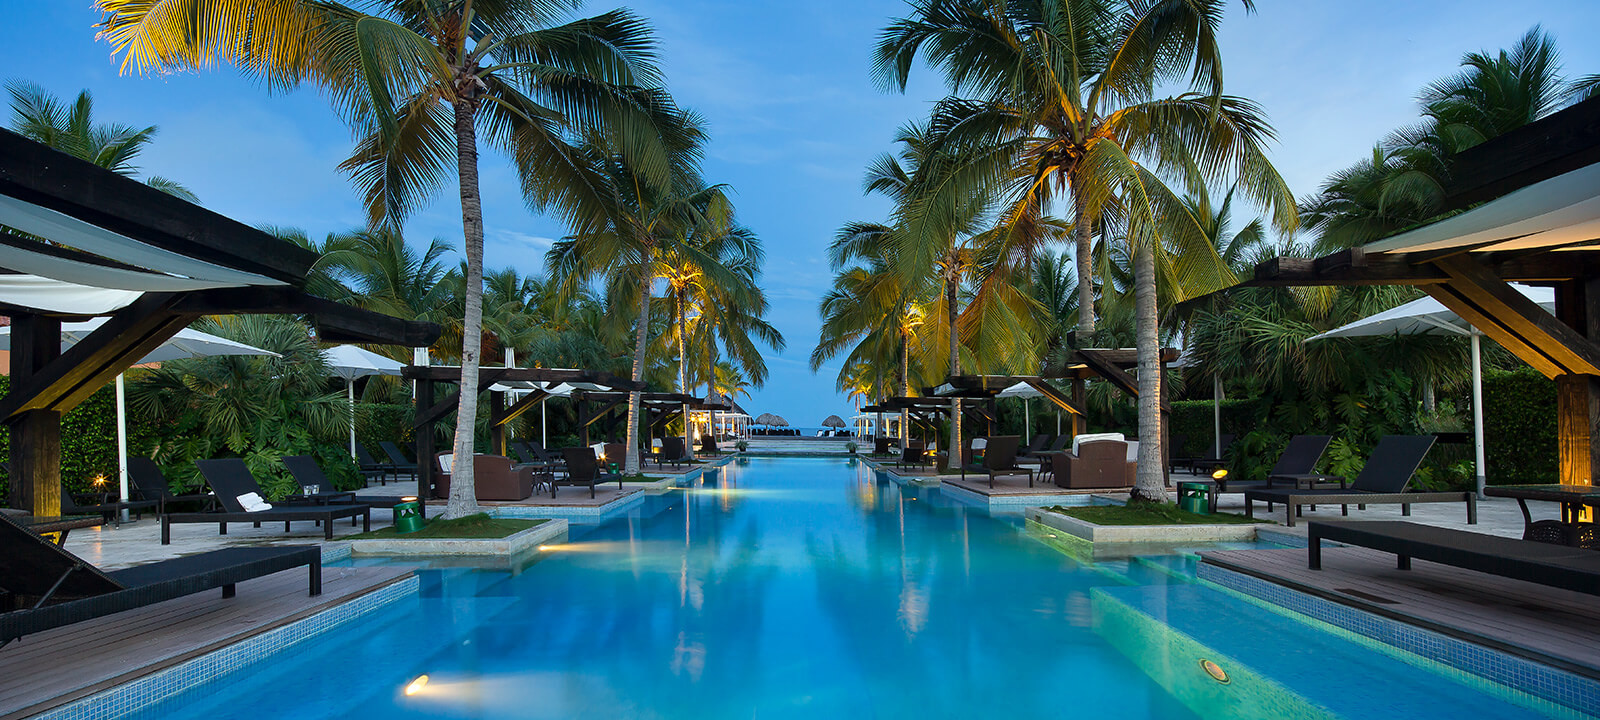 news-main-marriott-opening-three-new-luxury-dominican-republic-resorts.1546009344.jpg